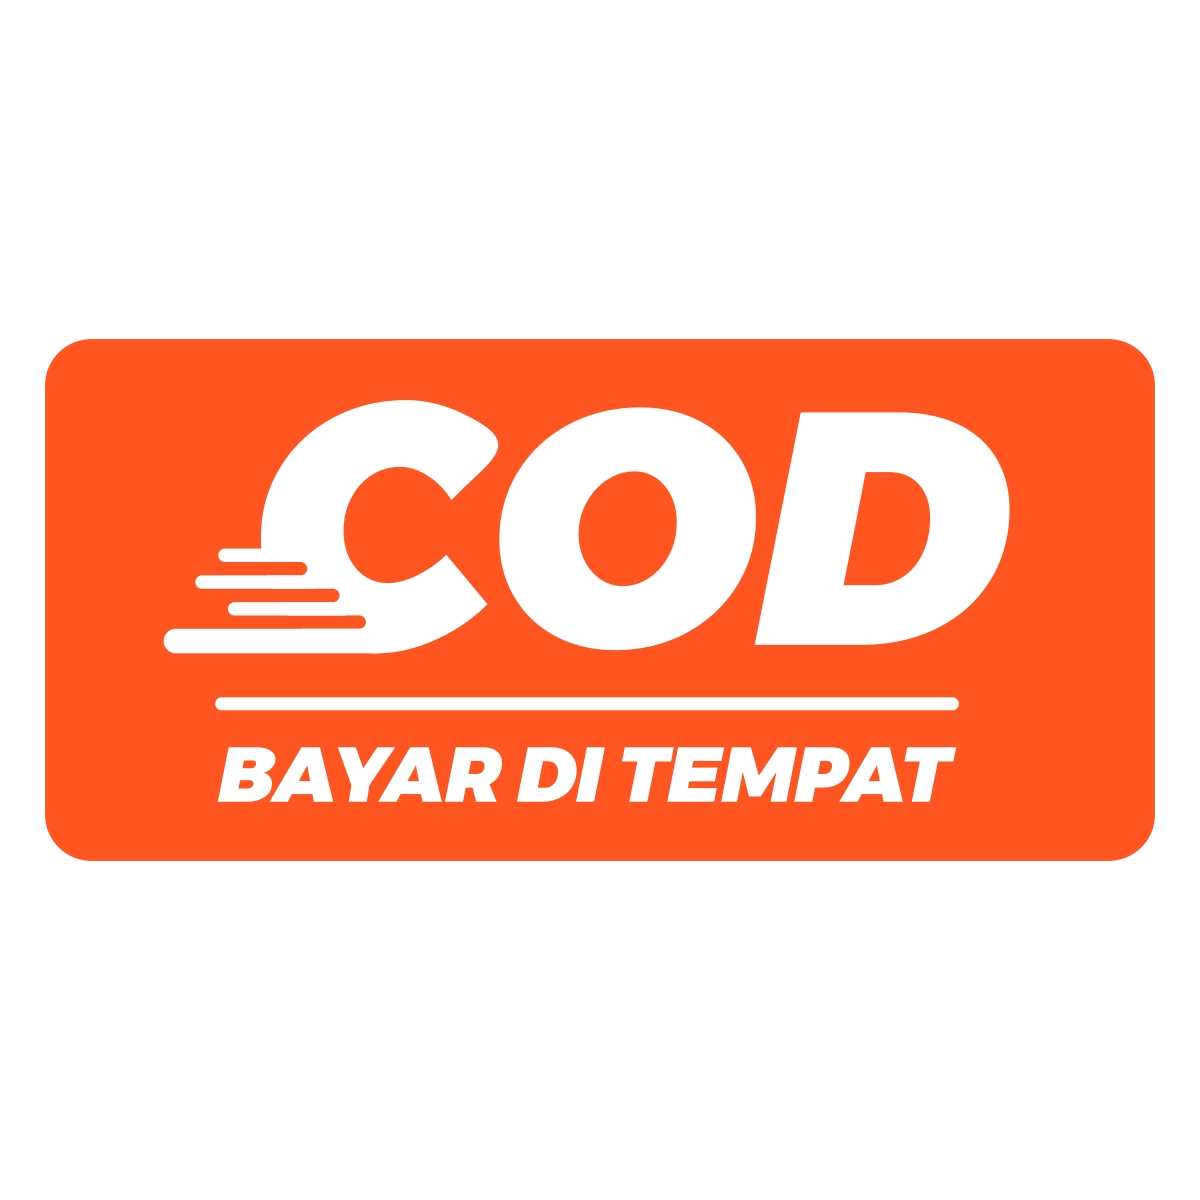 cod logo design